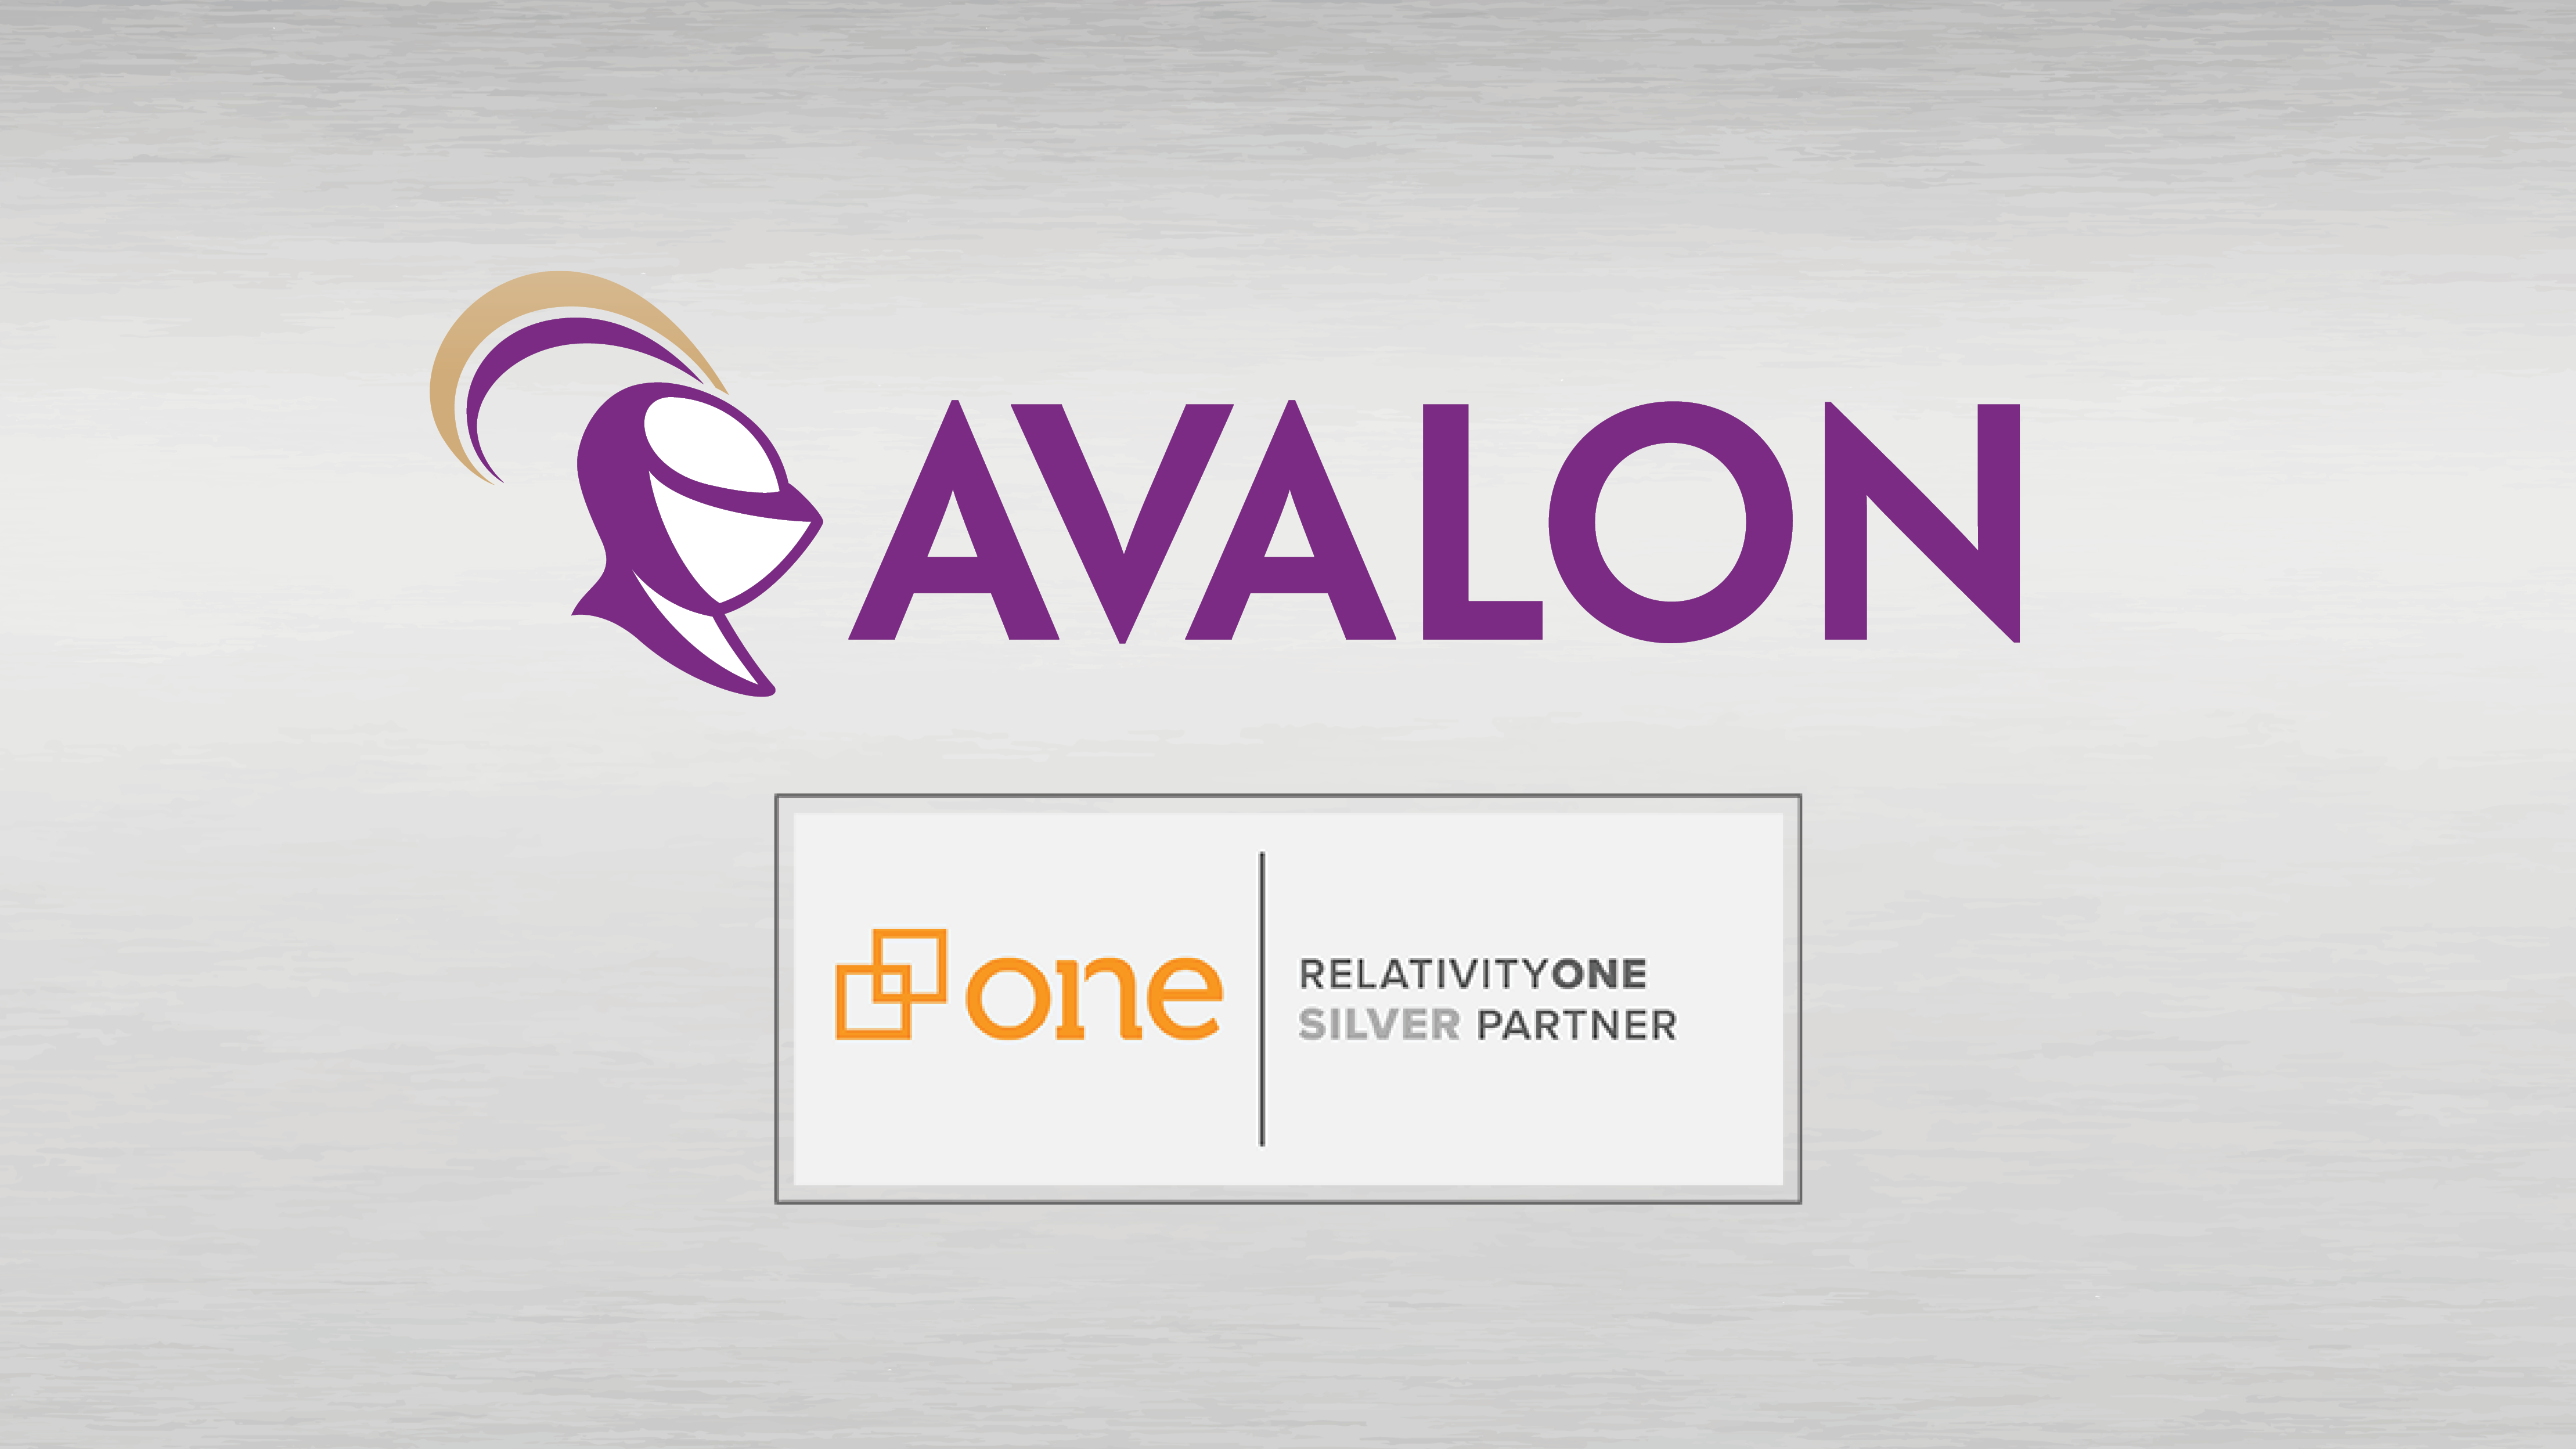 Avalon RelativityOne Silver Partner logos